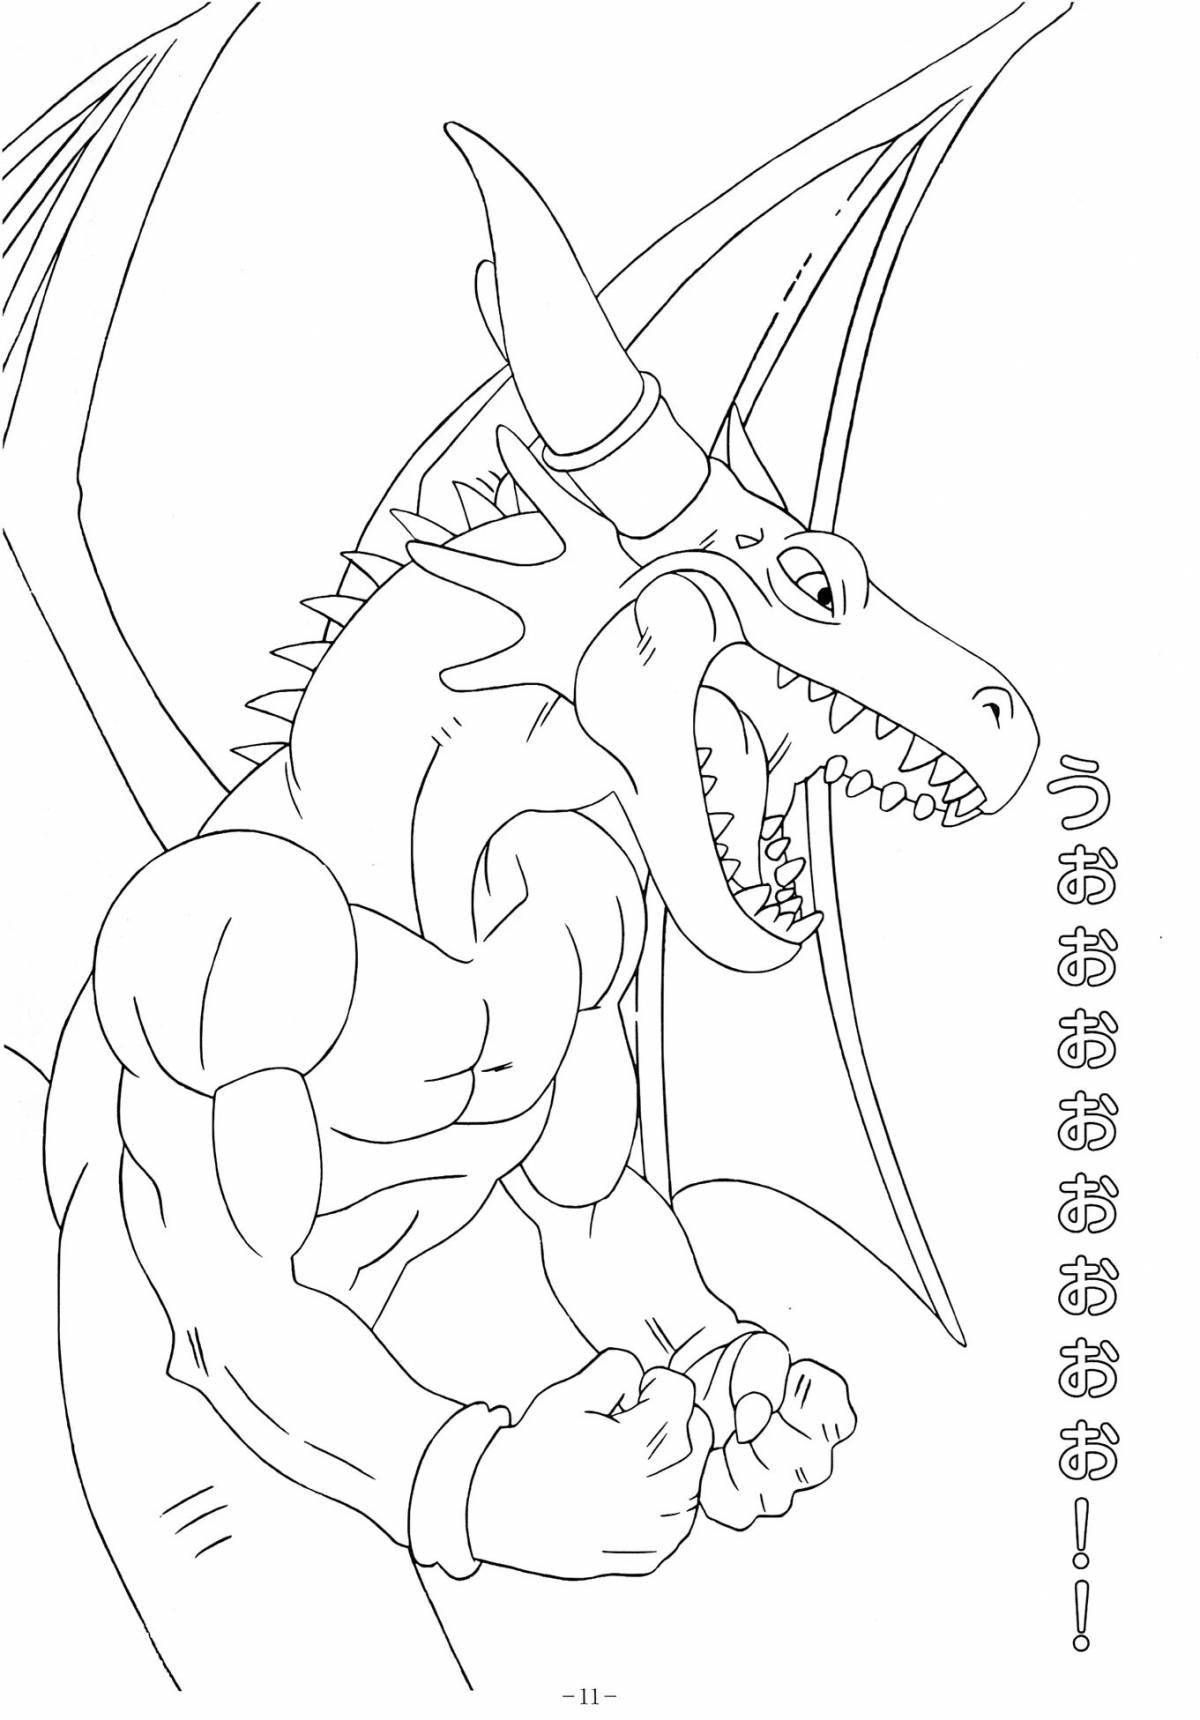 Robot dragon dynamic coloring page